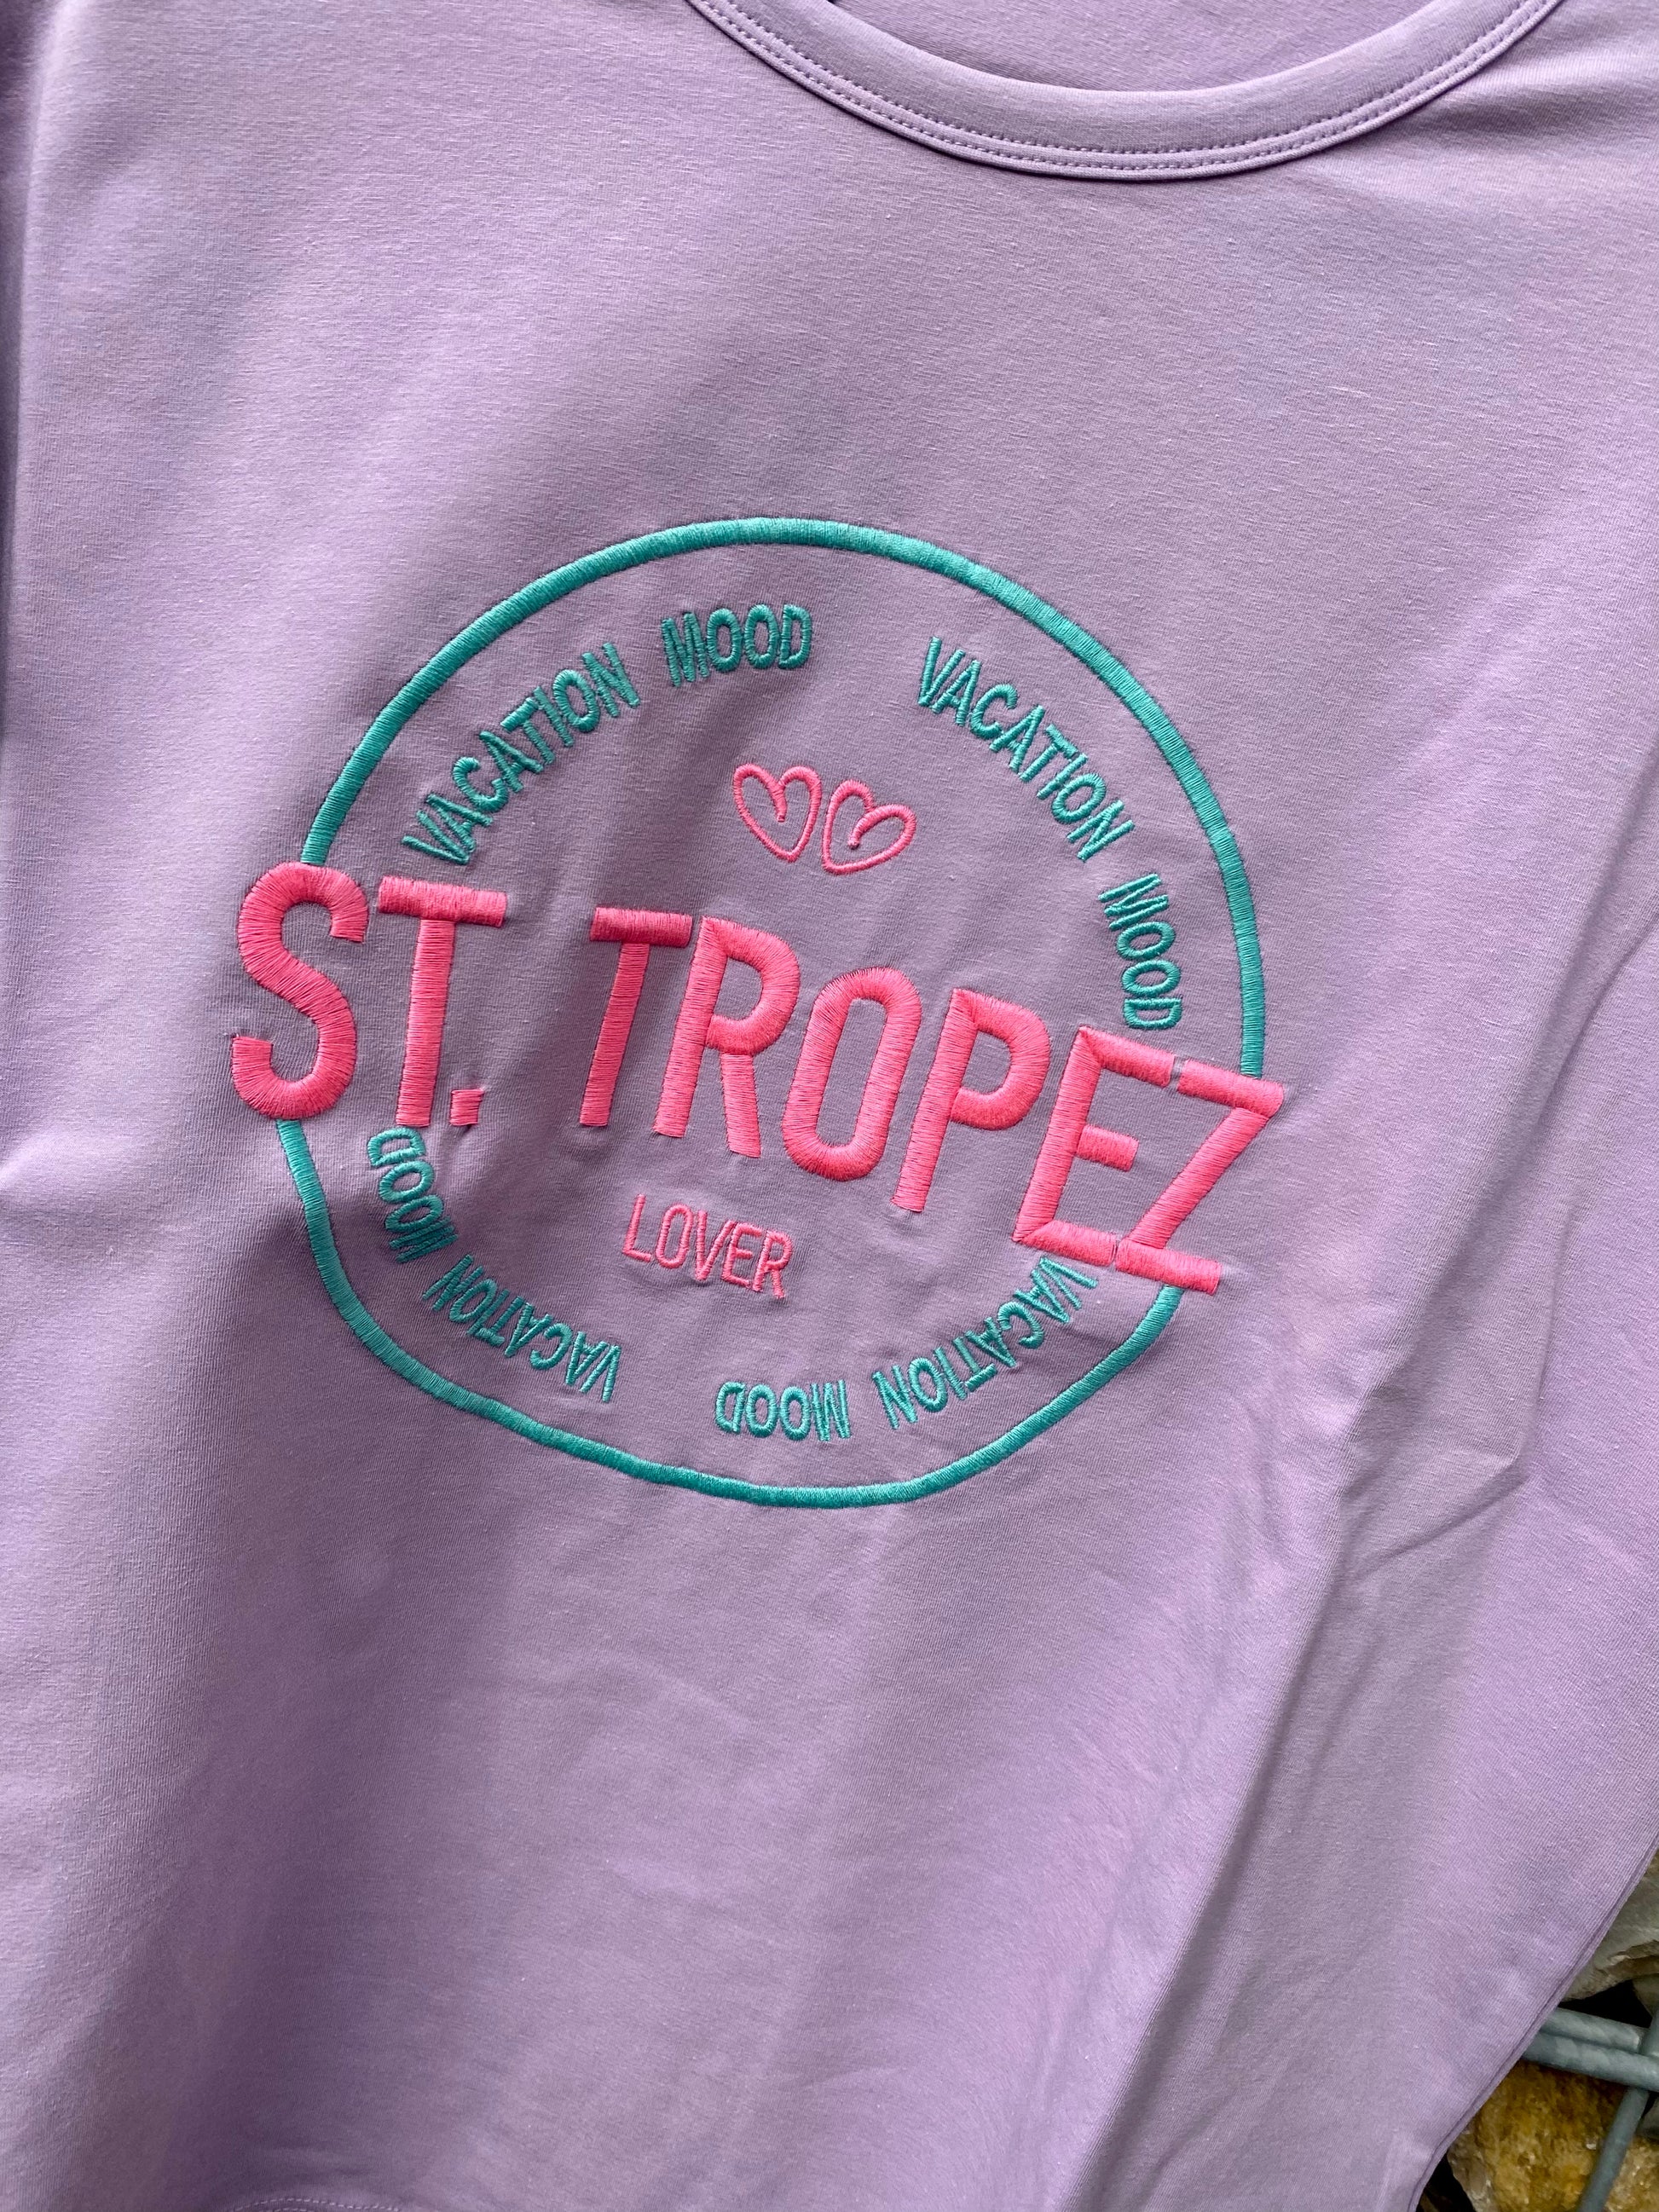 UG Shirt, - St.Tropez, Place T – Zwillingsherz Homelike